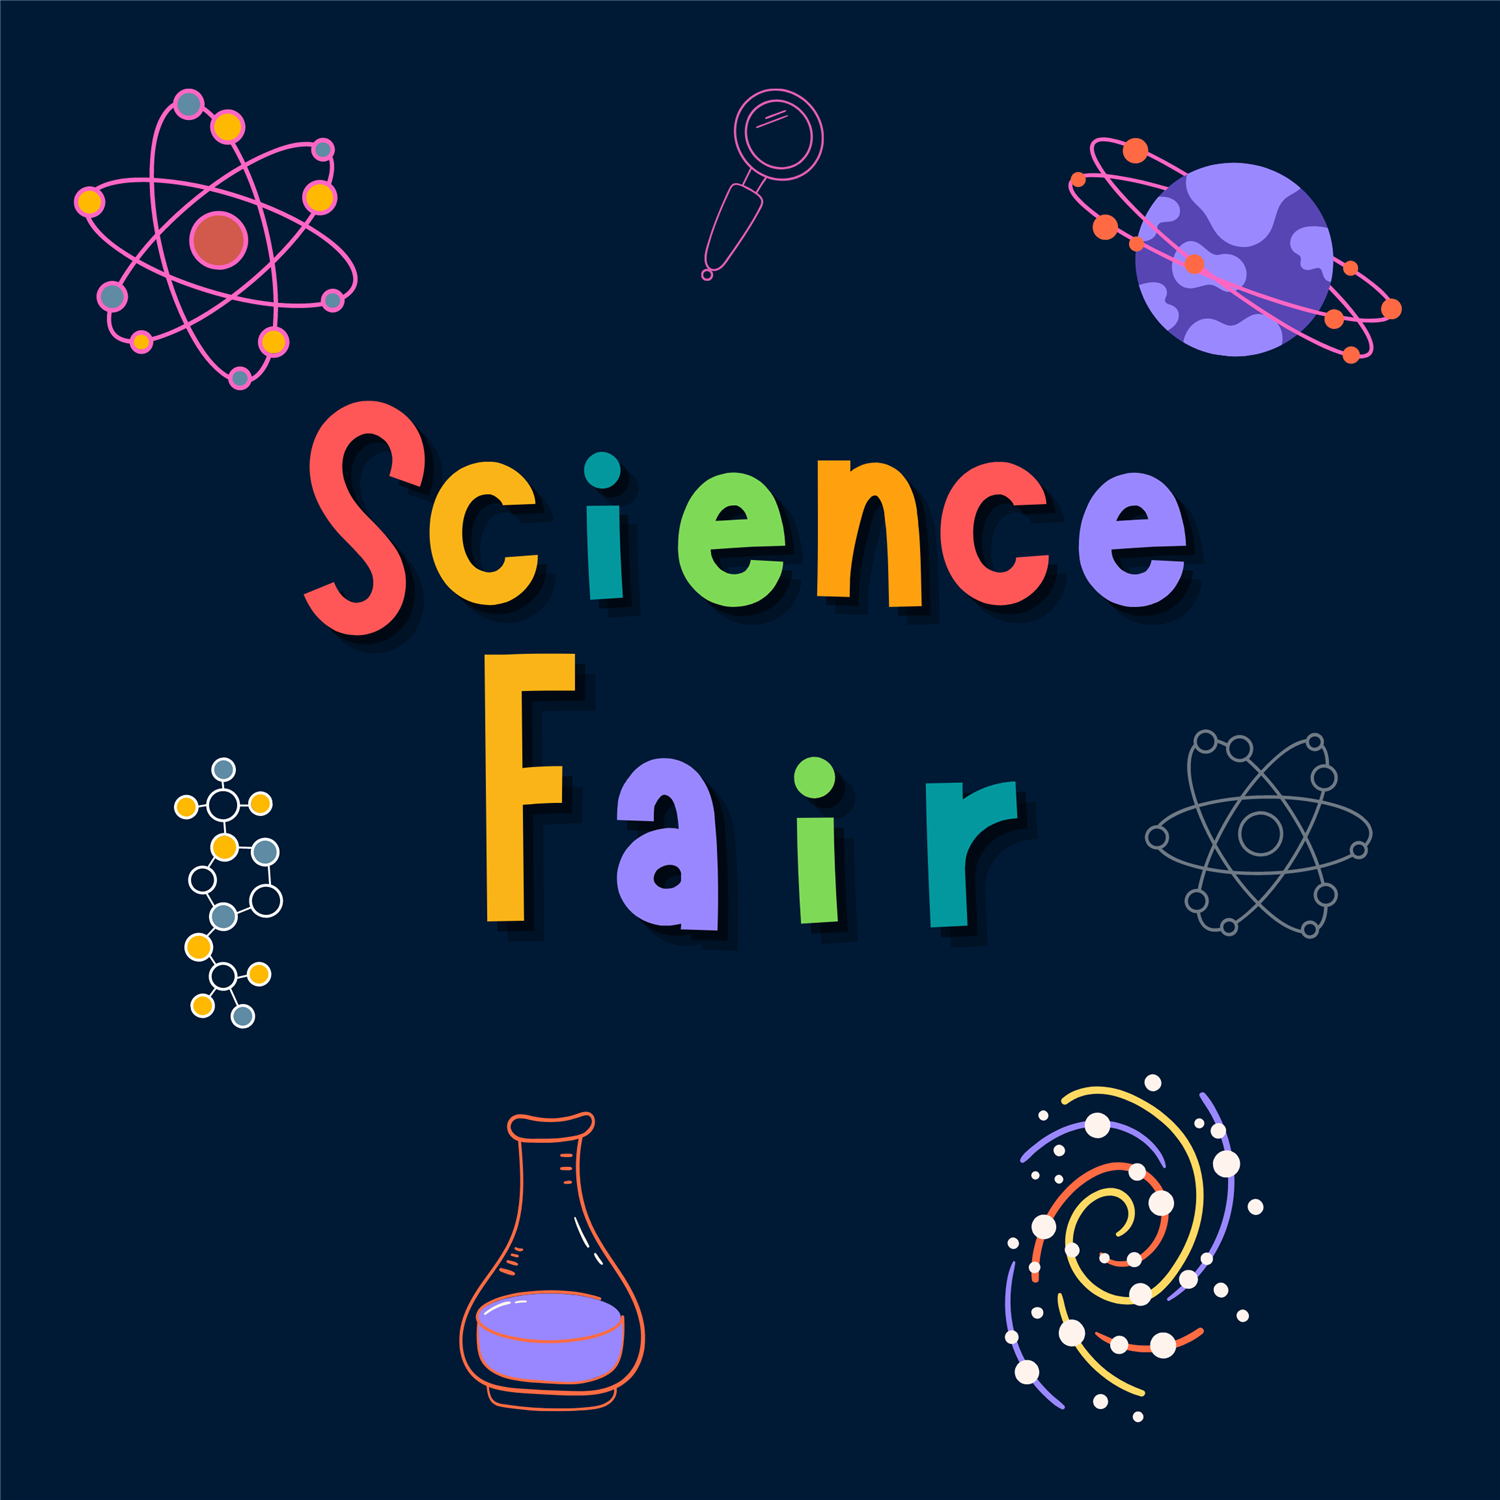  Science Fair Information